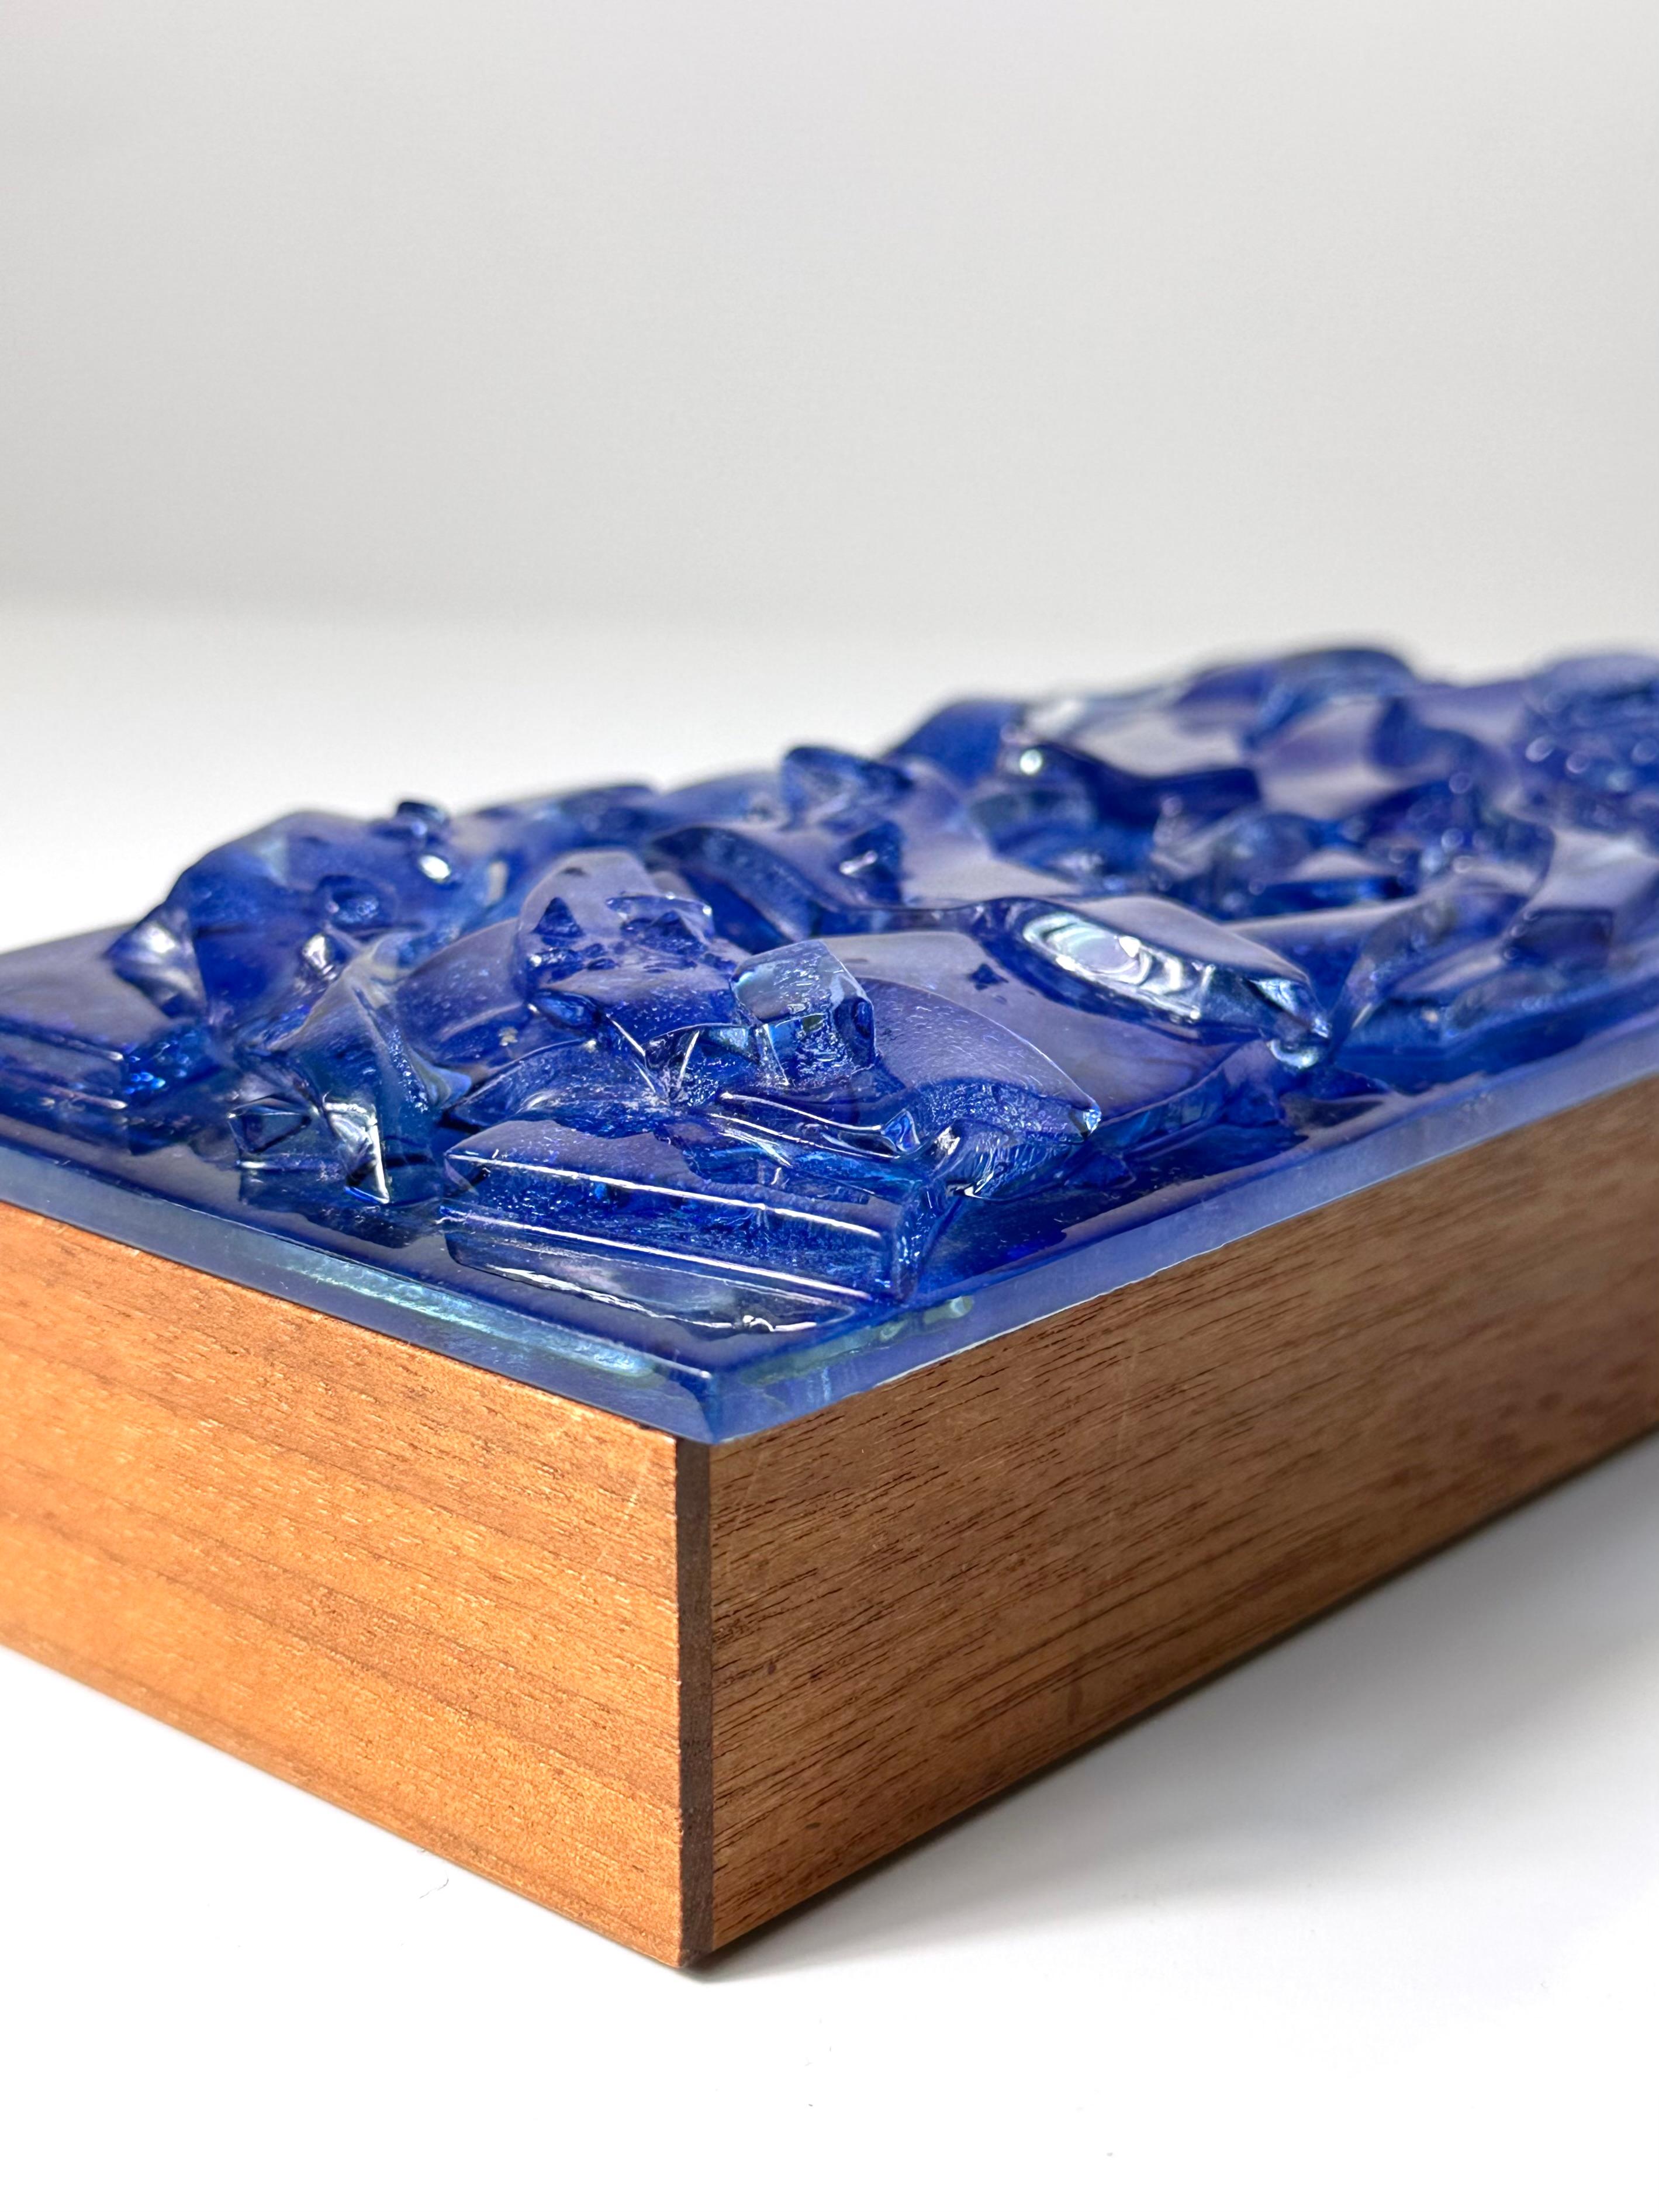 Caja de baratijas de teca con vidrio fundido azul cobalto de Robert Brown Moderno de mediados de siglo en venta